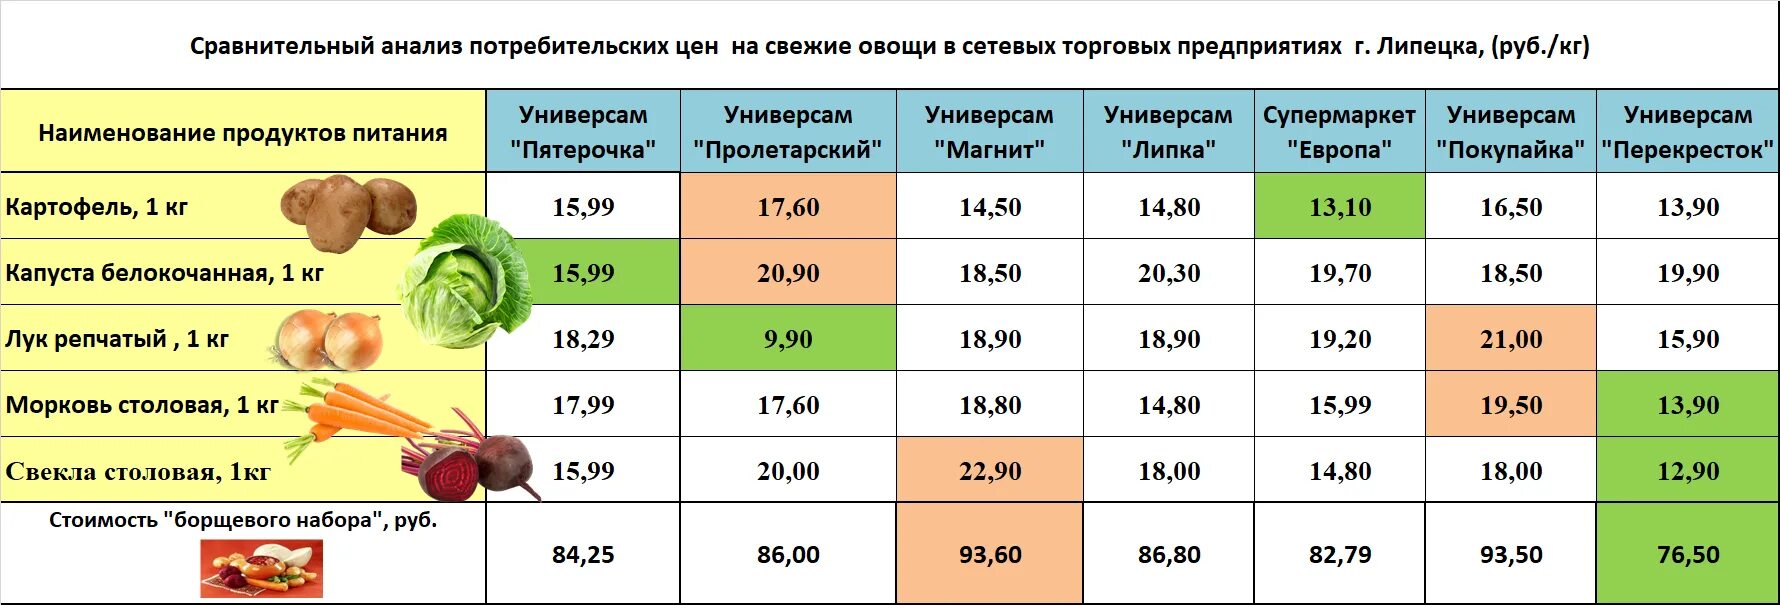 Цена овощей за кг. Расценки на овощи. Сравнение цен на овощи. Анализ цен на овощи. Сравнительный анализ цен на овощную продукцию.